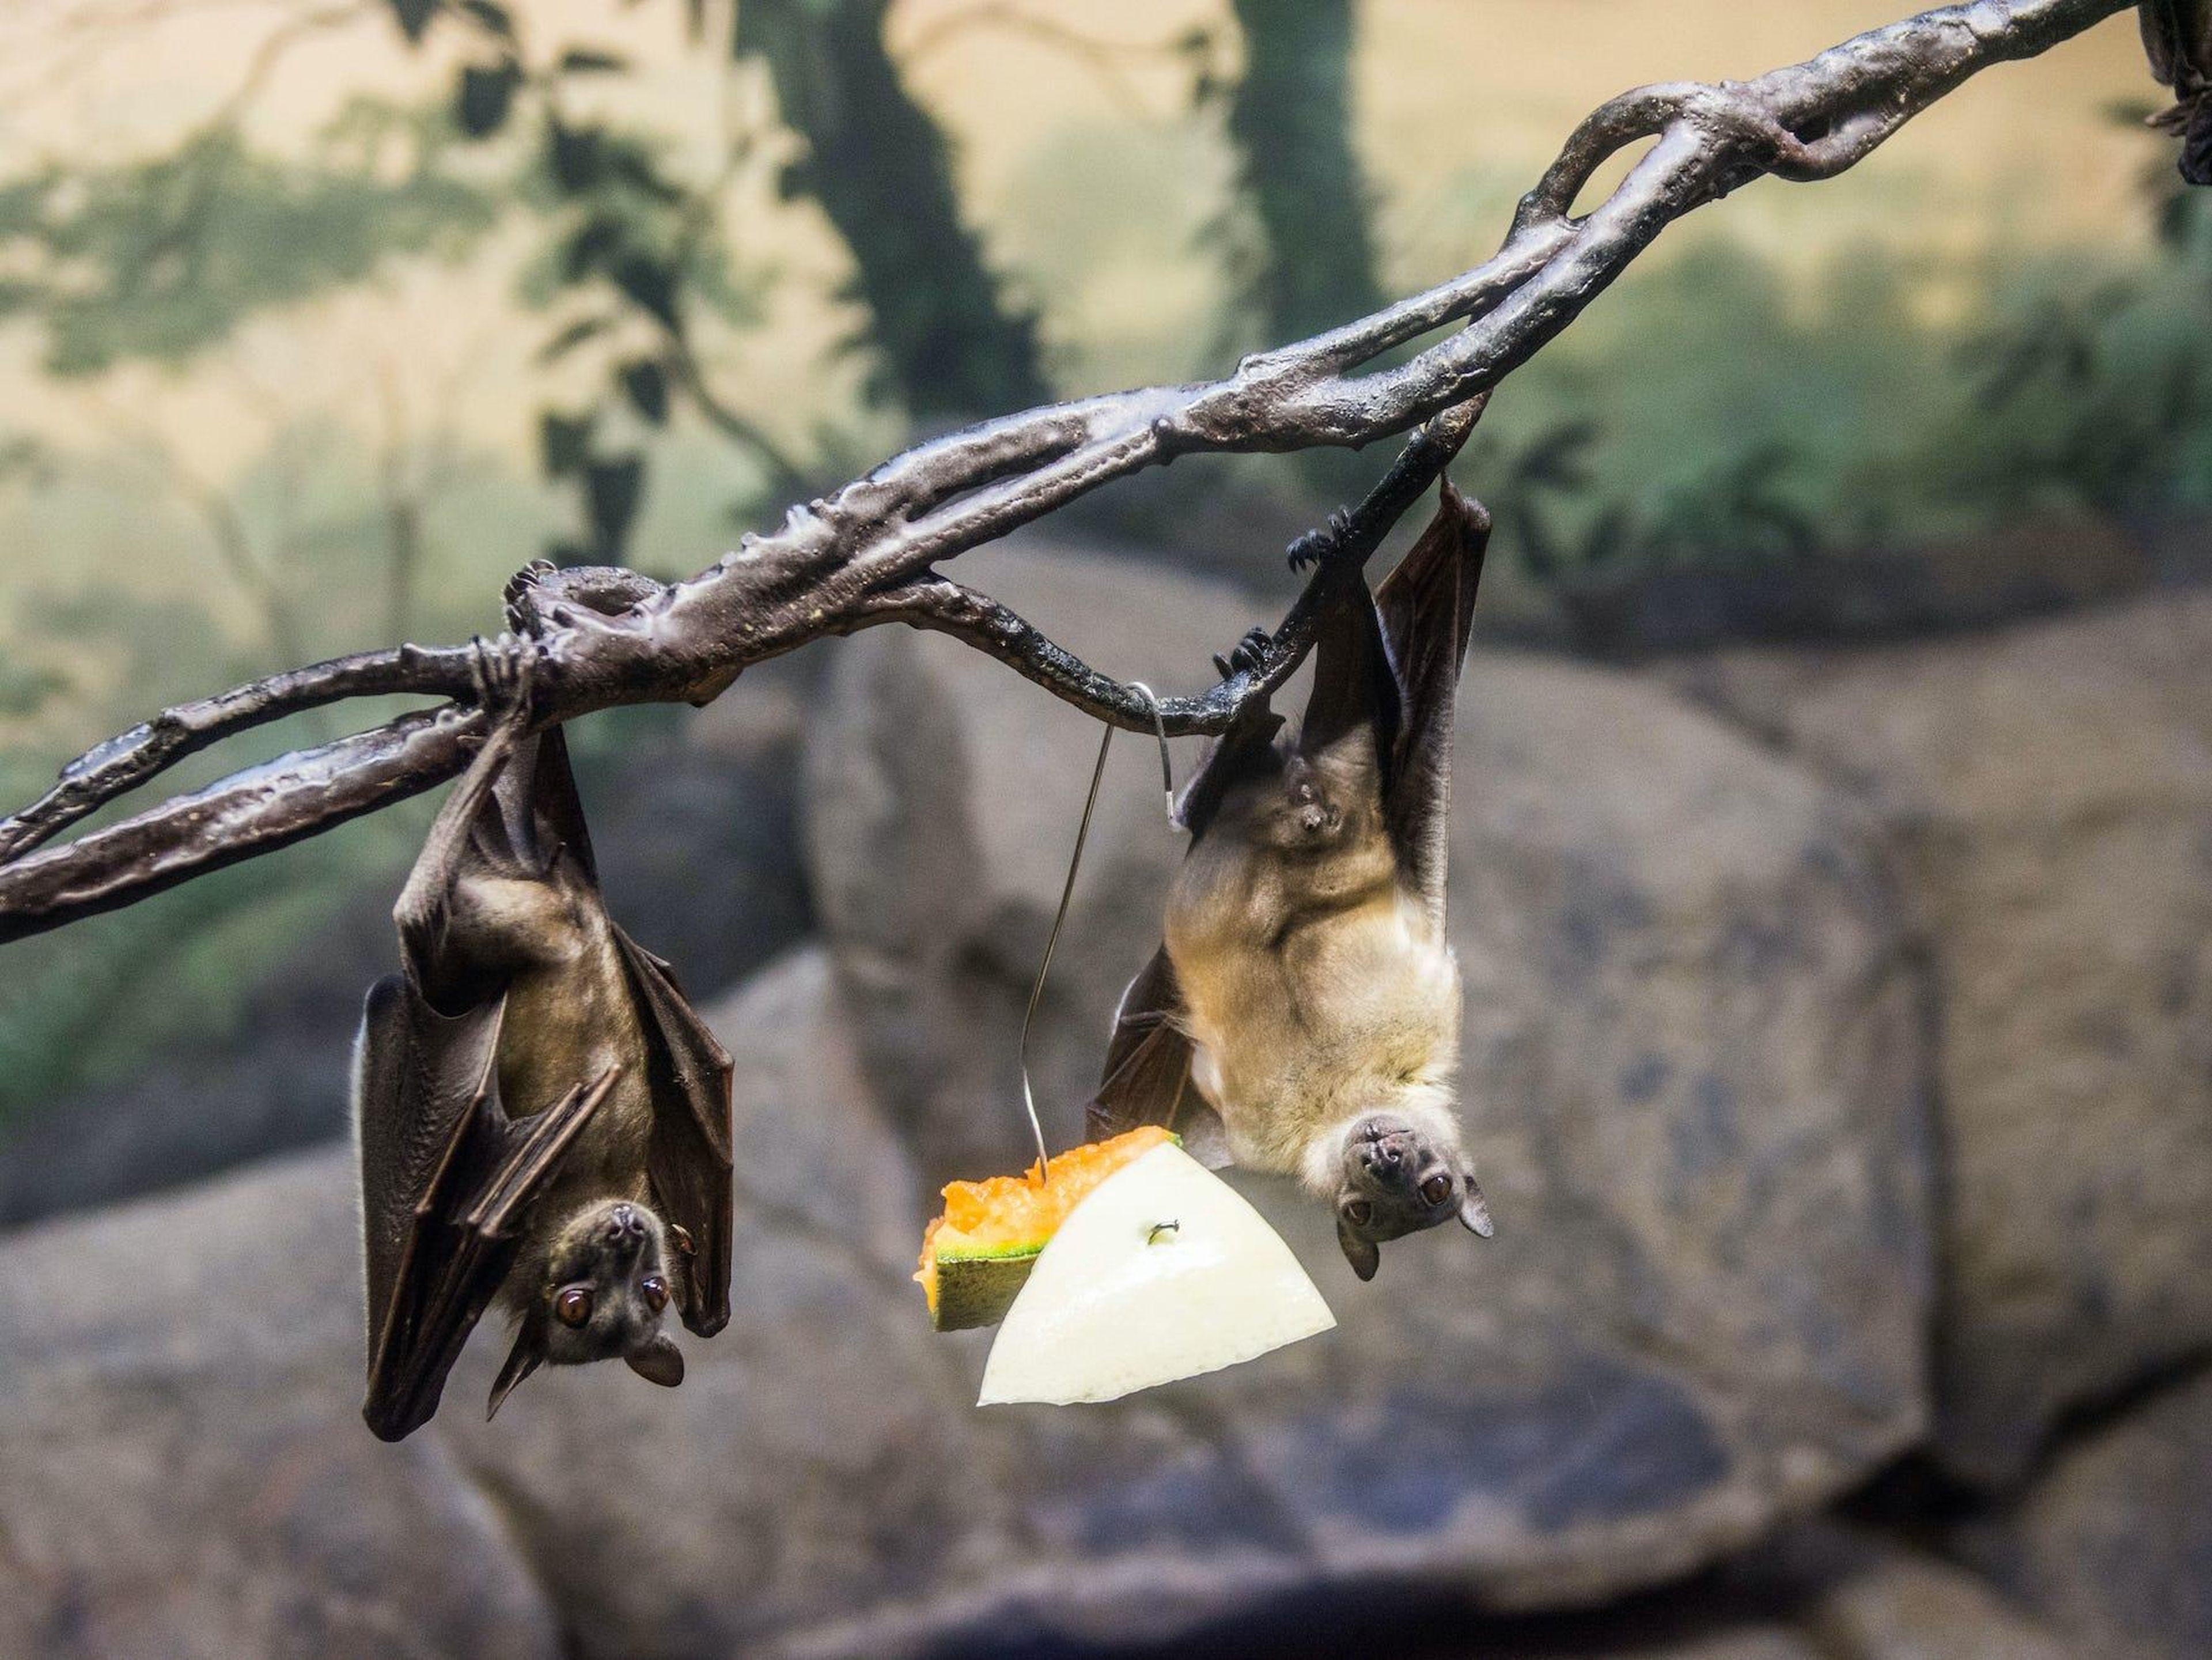 Two bats eating fruit together.